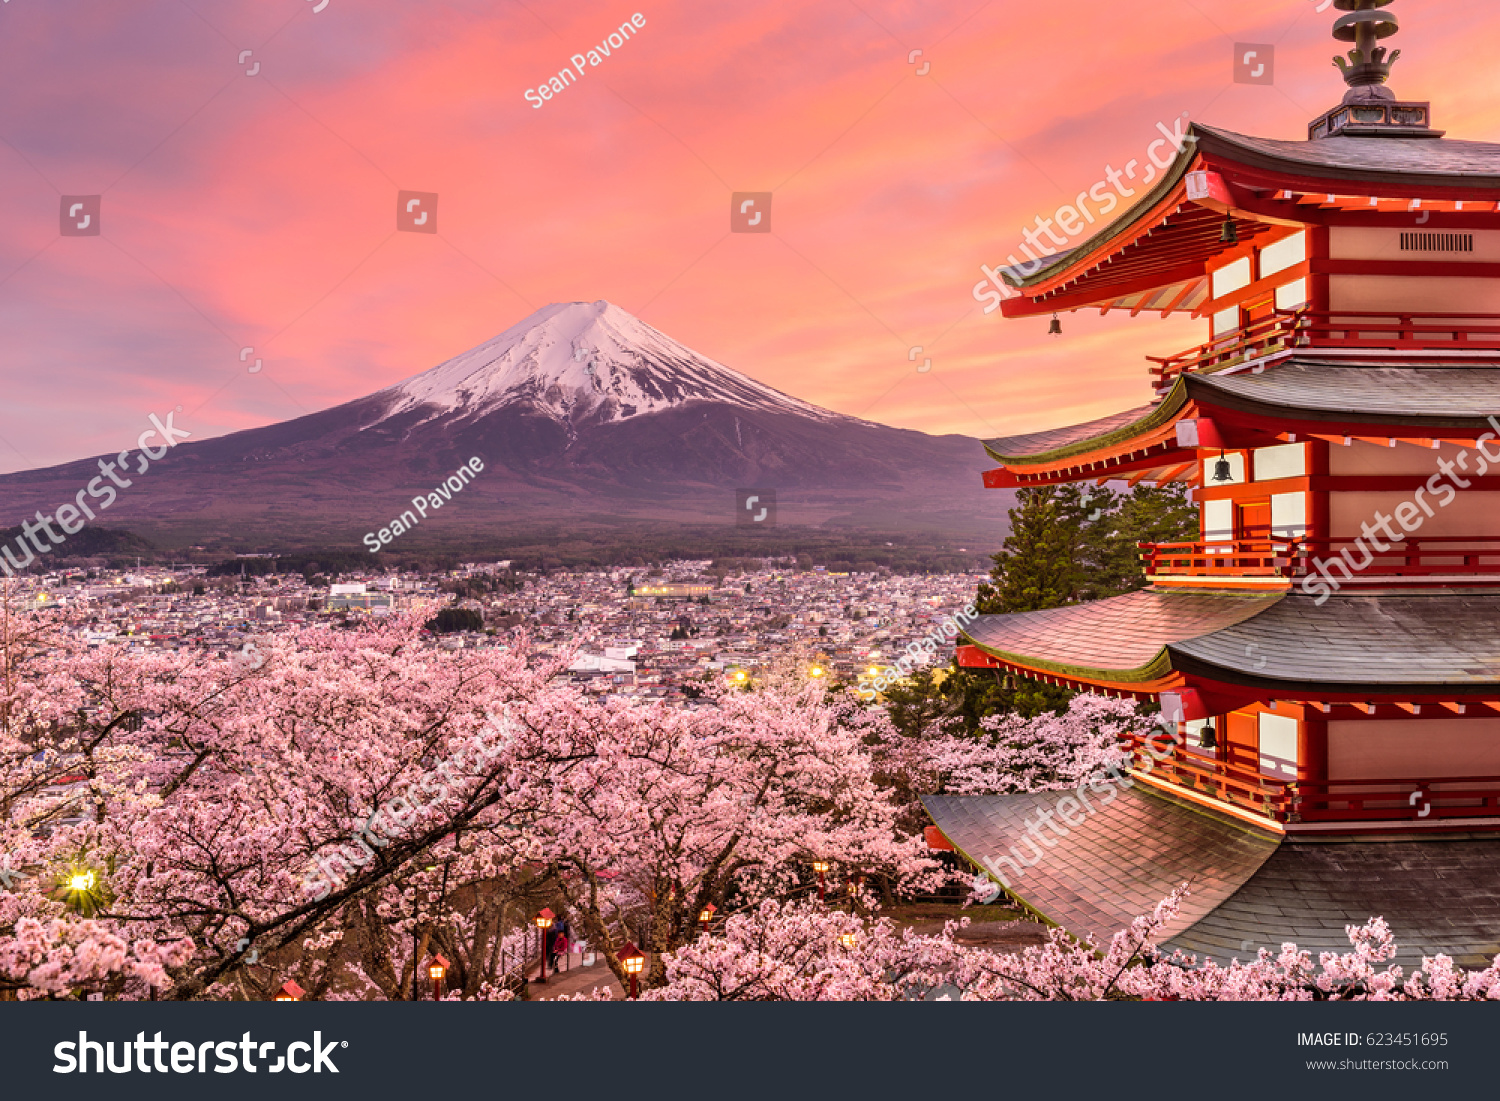 Fujiyoshida, Japan at Chureito Pagoda and Mt. Fuji in the spring with cherry blossoms. #623451695